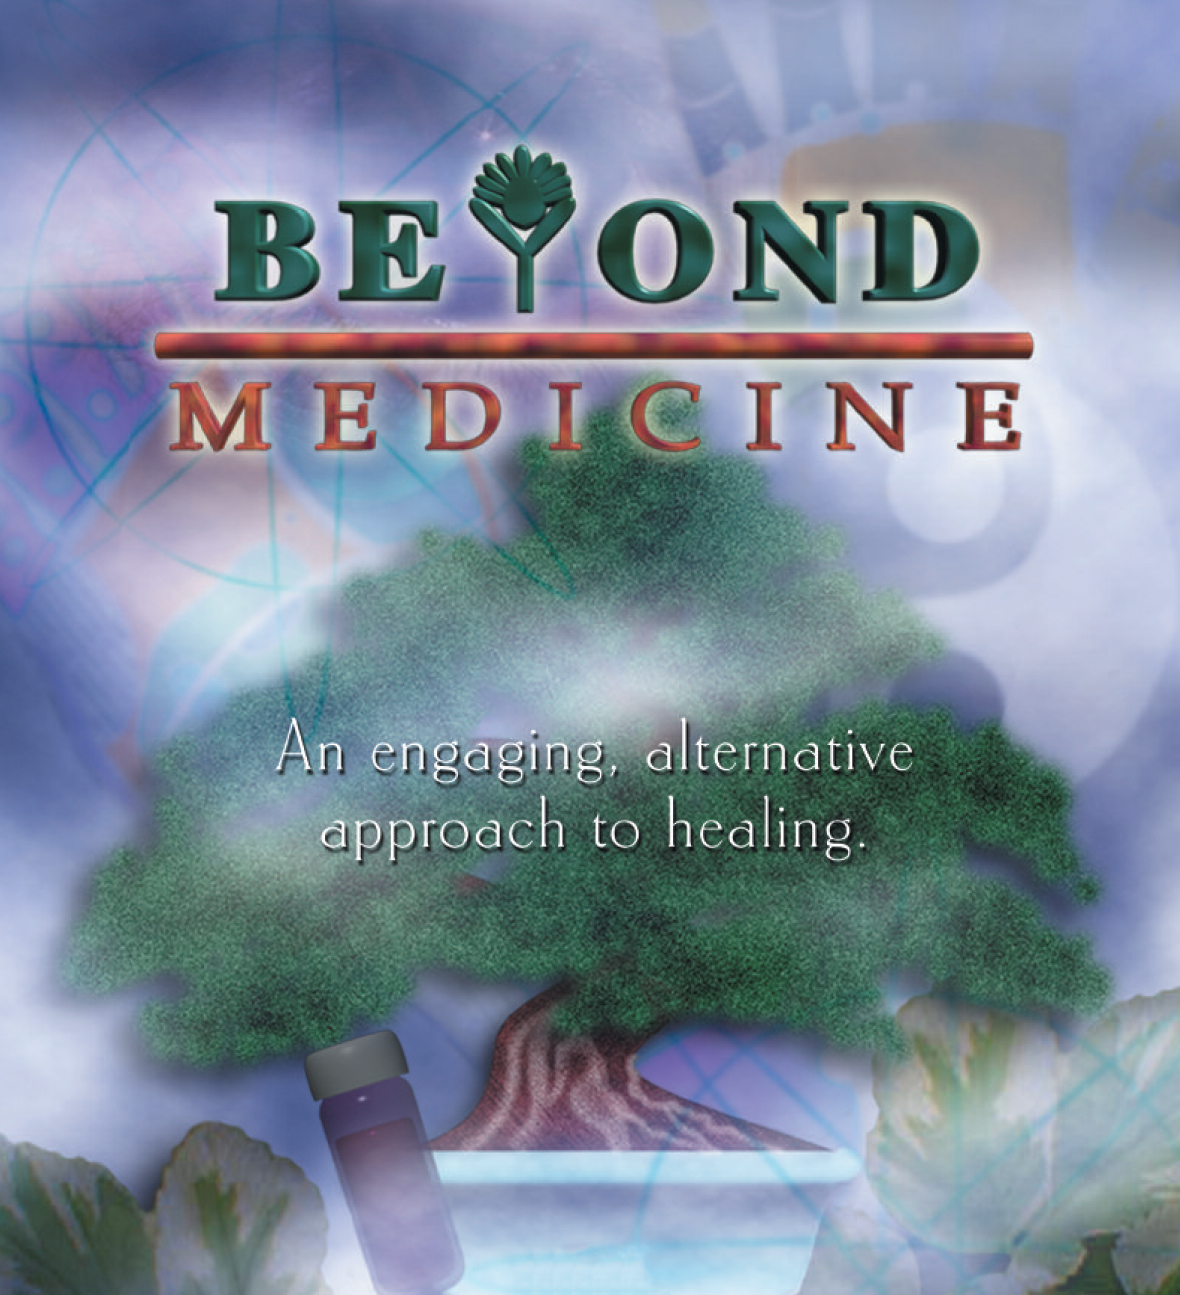 Beyond Medicine.png